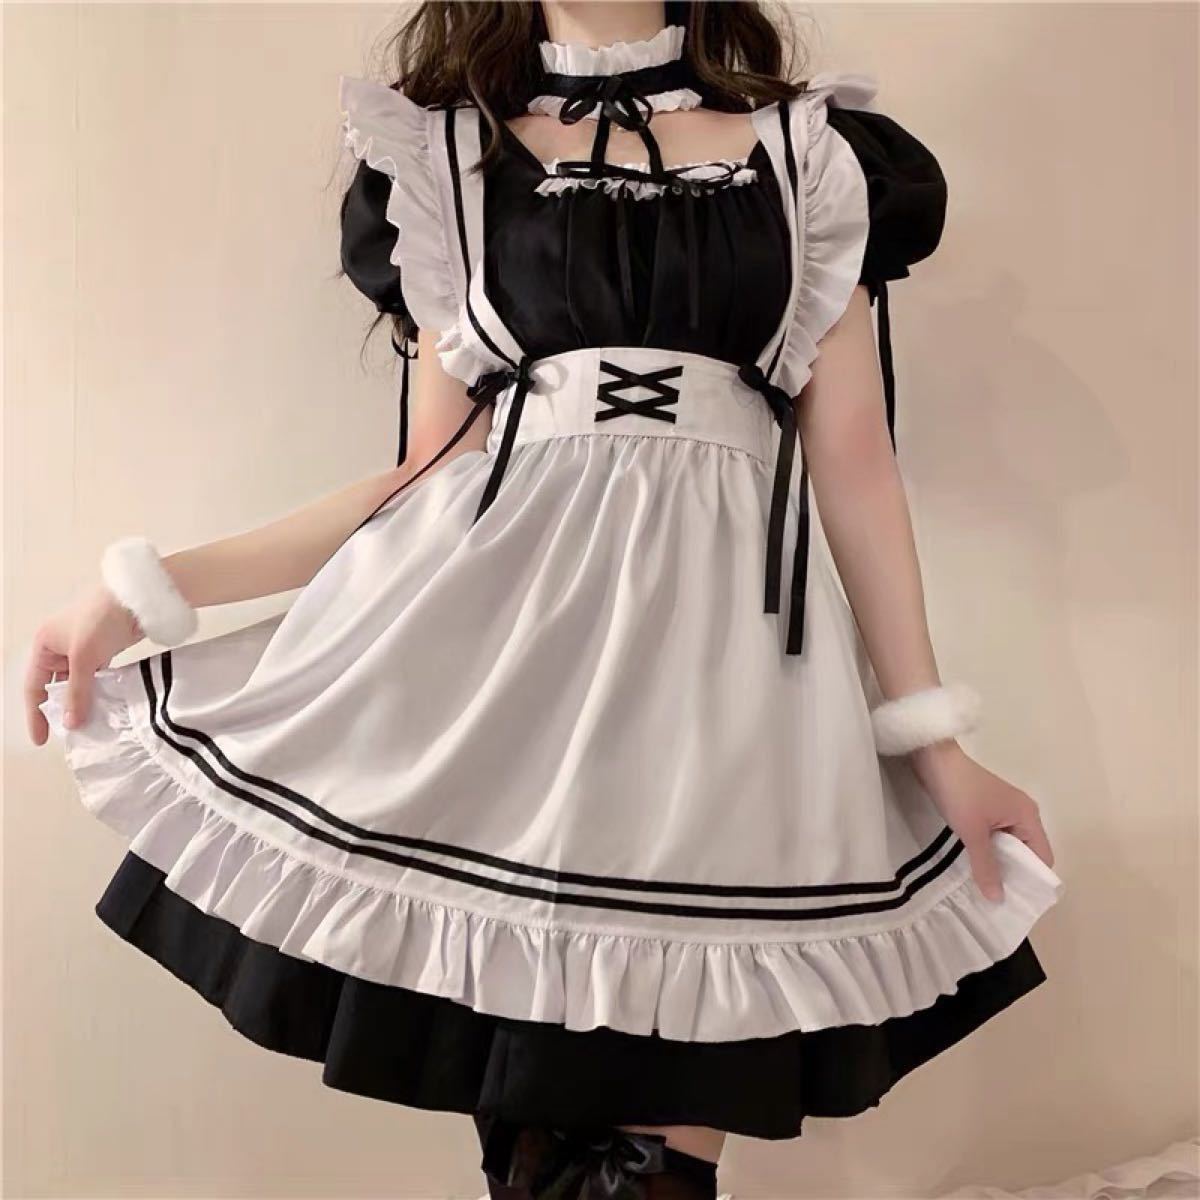 【sサイズ】黒メイド服 萌え コスプレ 衣装 ロリータ かわいい 6 点セット+ 白靴下